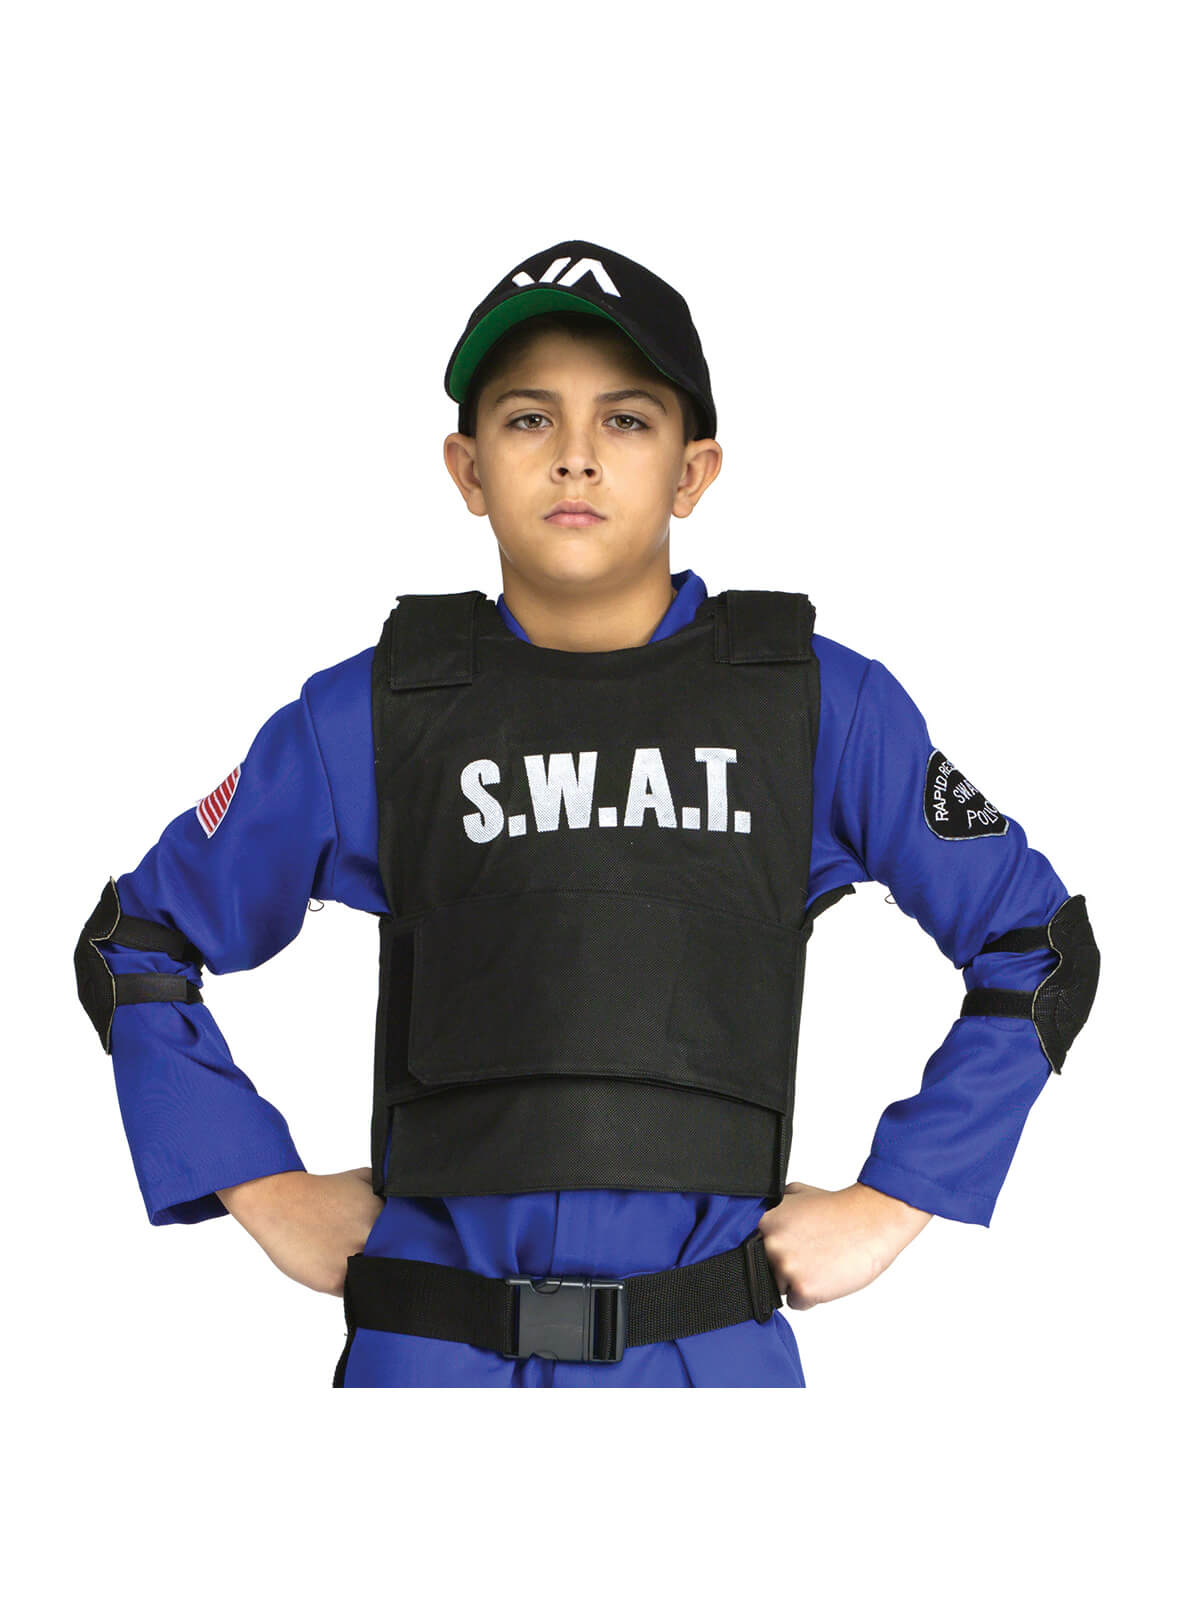 S.W.A.T. Childrens Vest